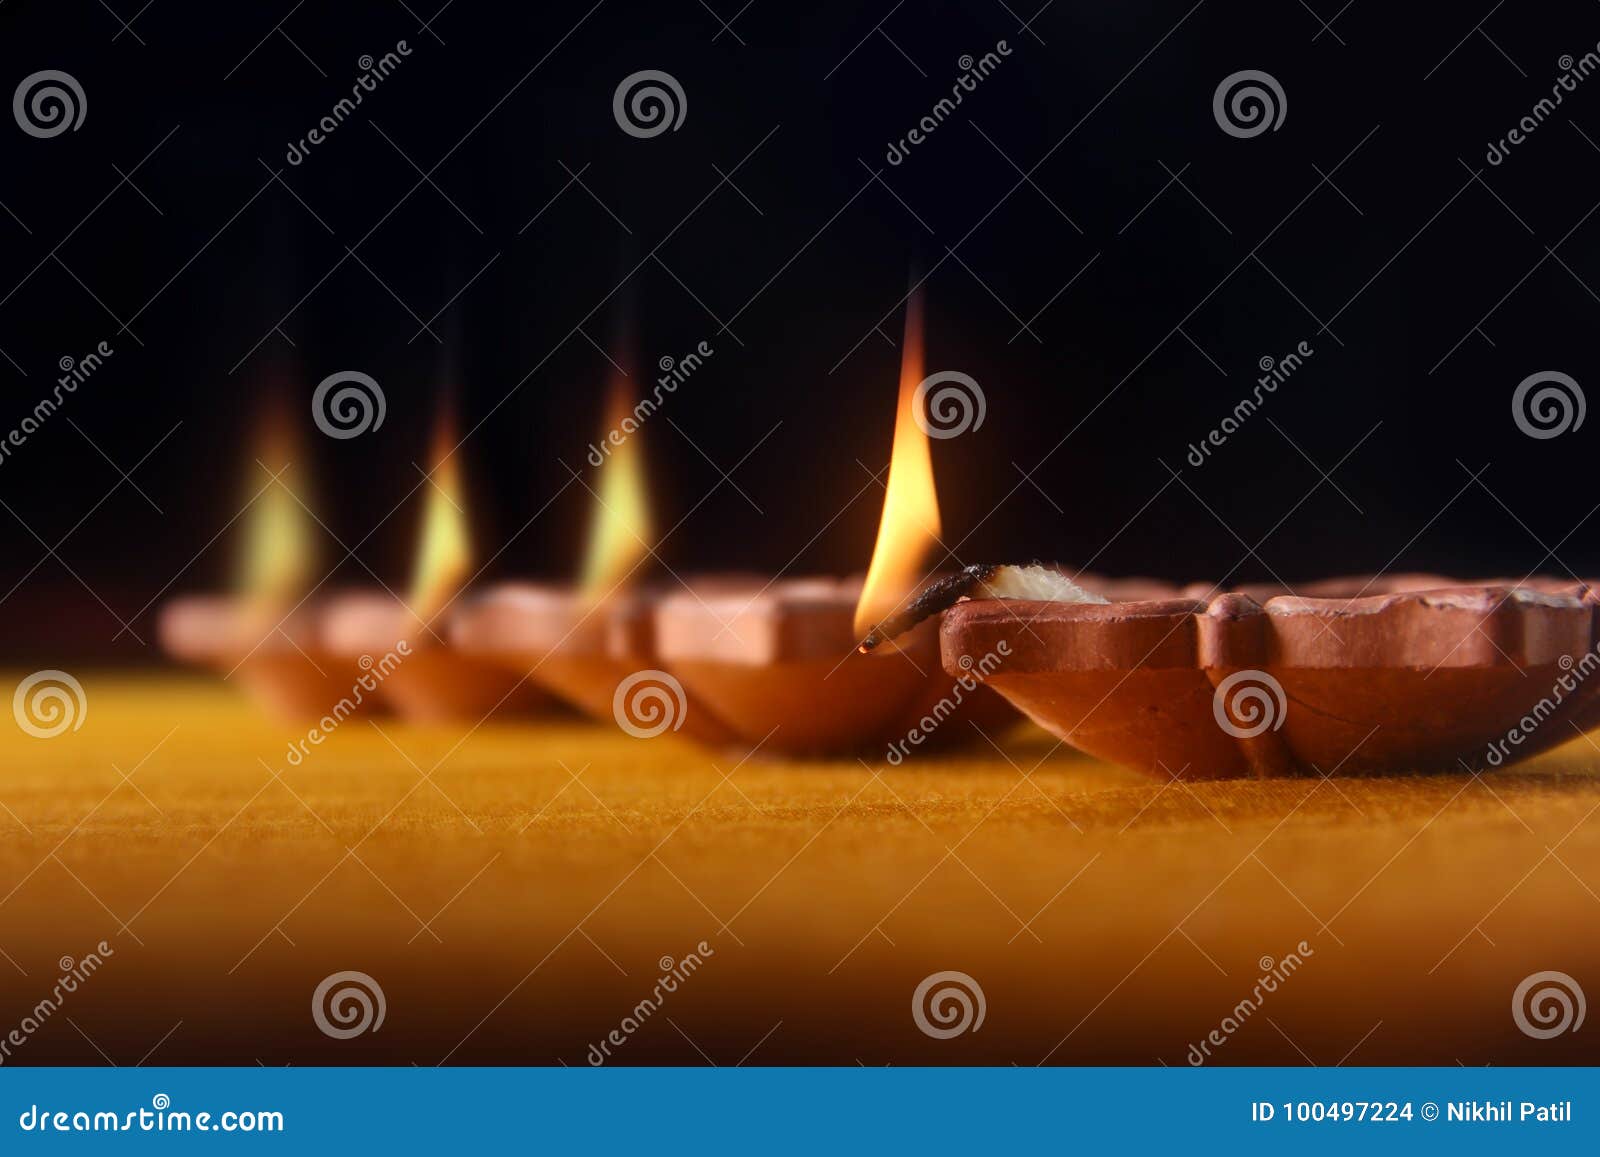 Rangoli Design Around Diwali Lamp Stock Photo - Image of flame ...